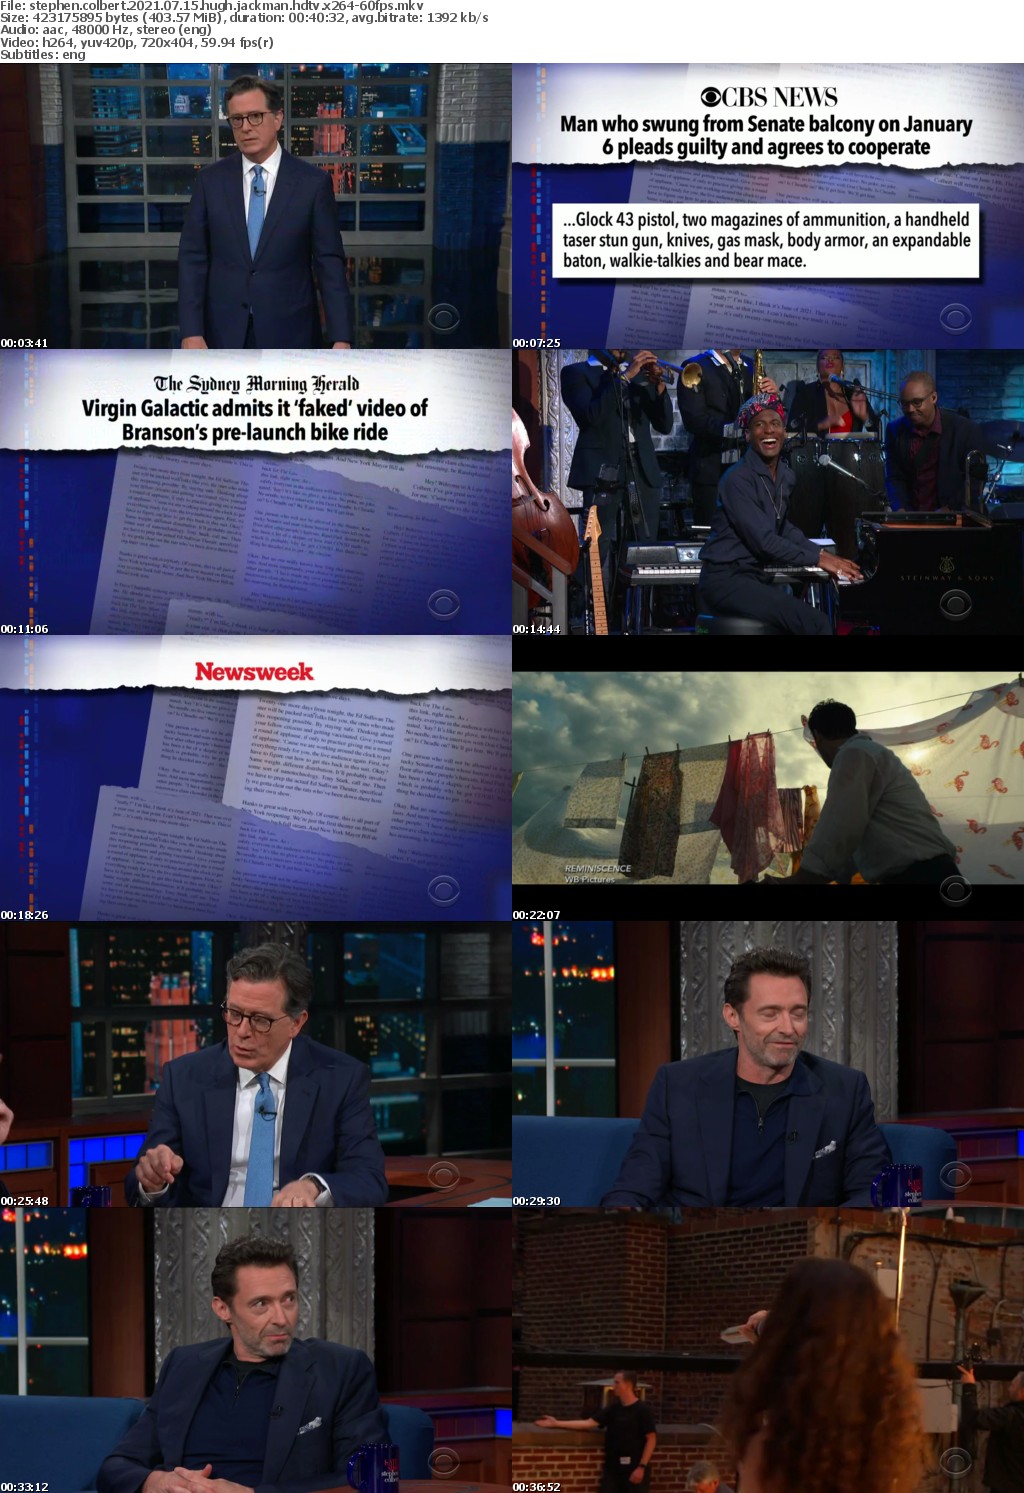 Stephen Colbert 2021 07 15 Hugh Jackman HDTV x264-60FPS